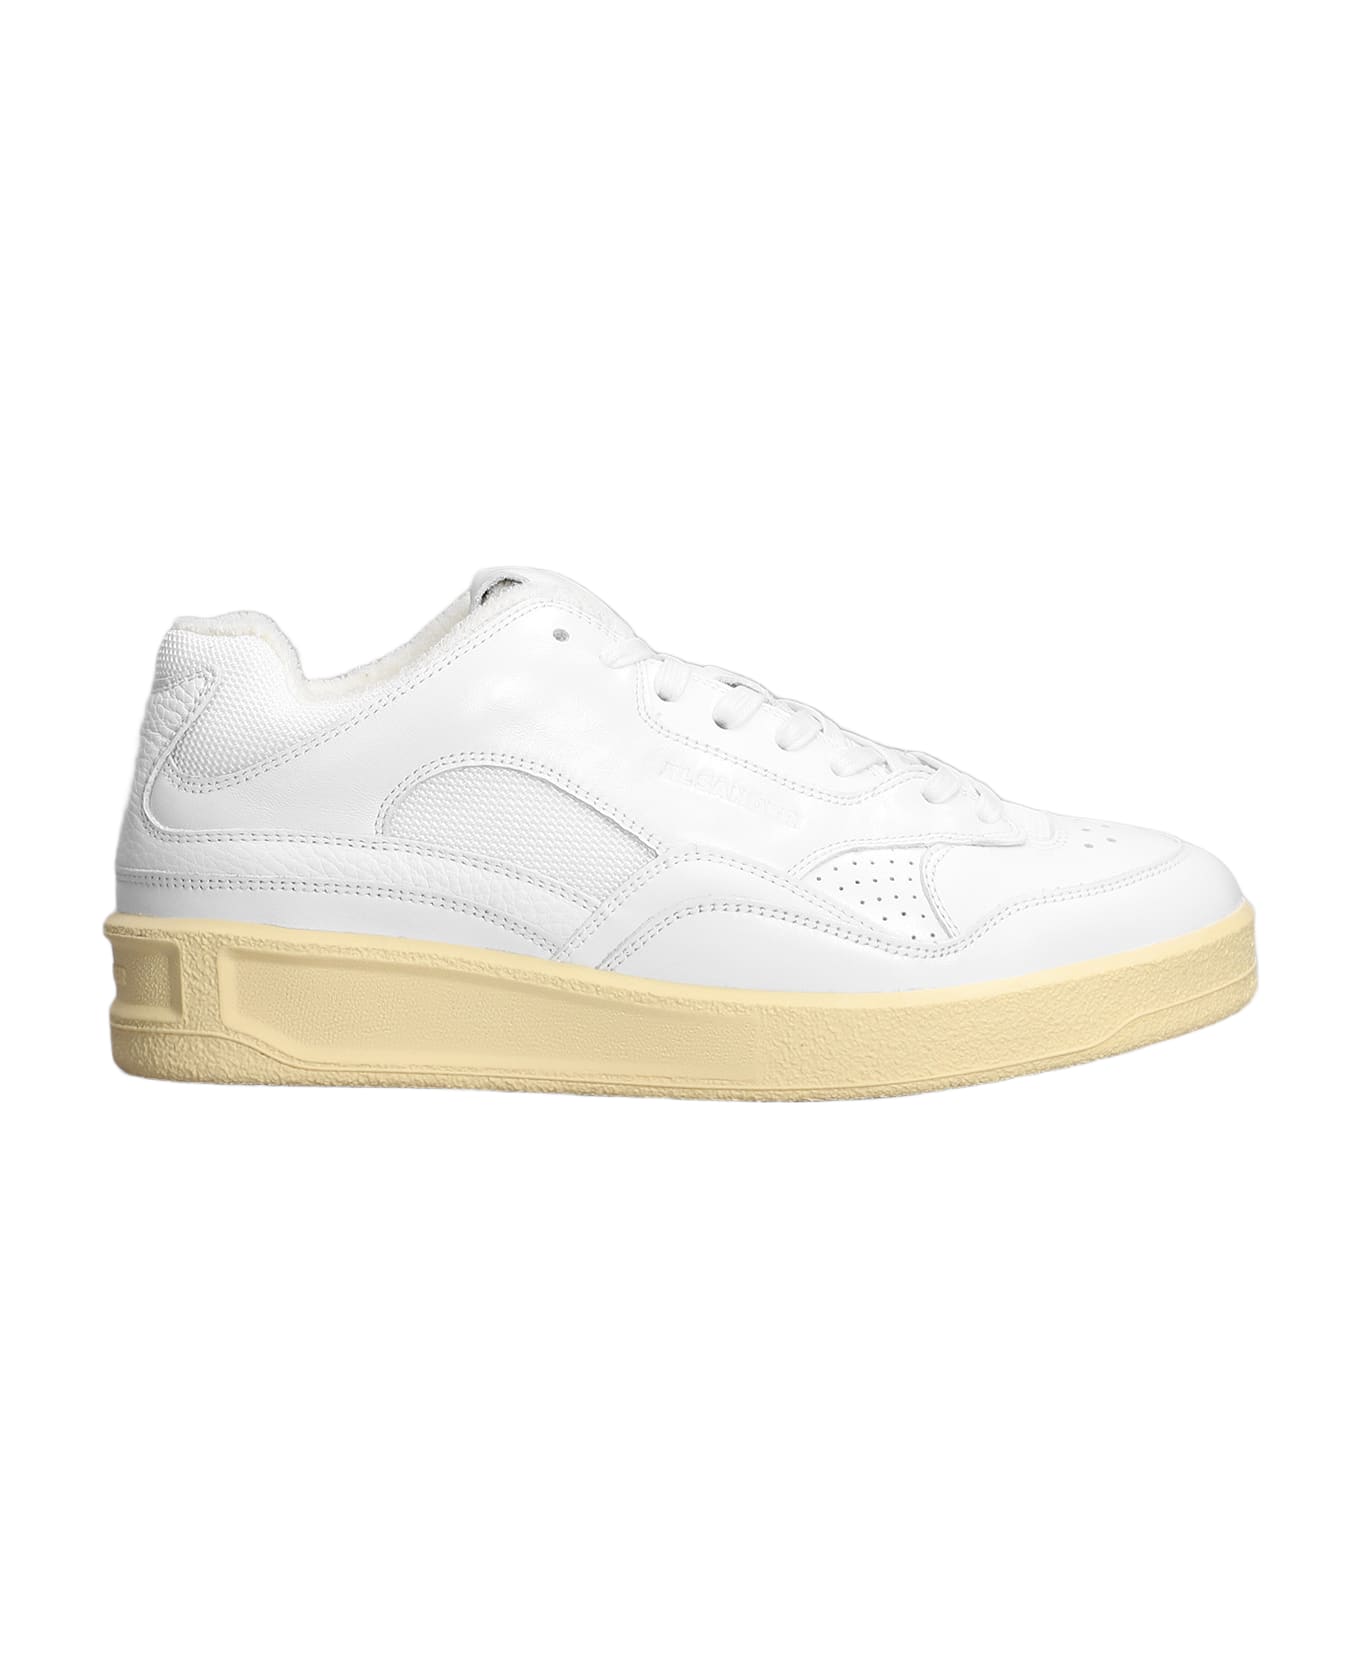 Jil Sander White Leather Sneakers - White